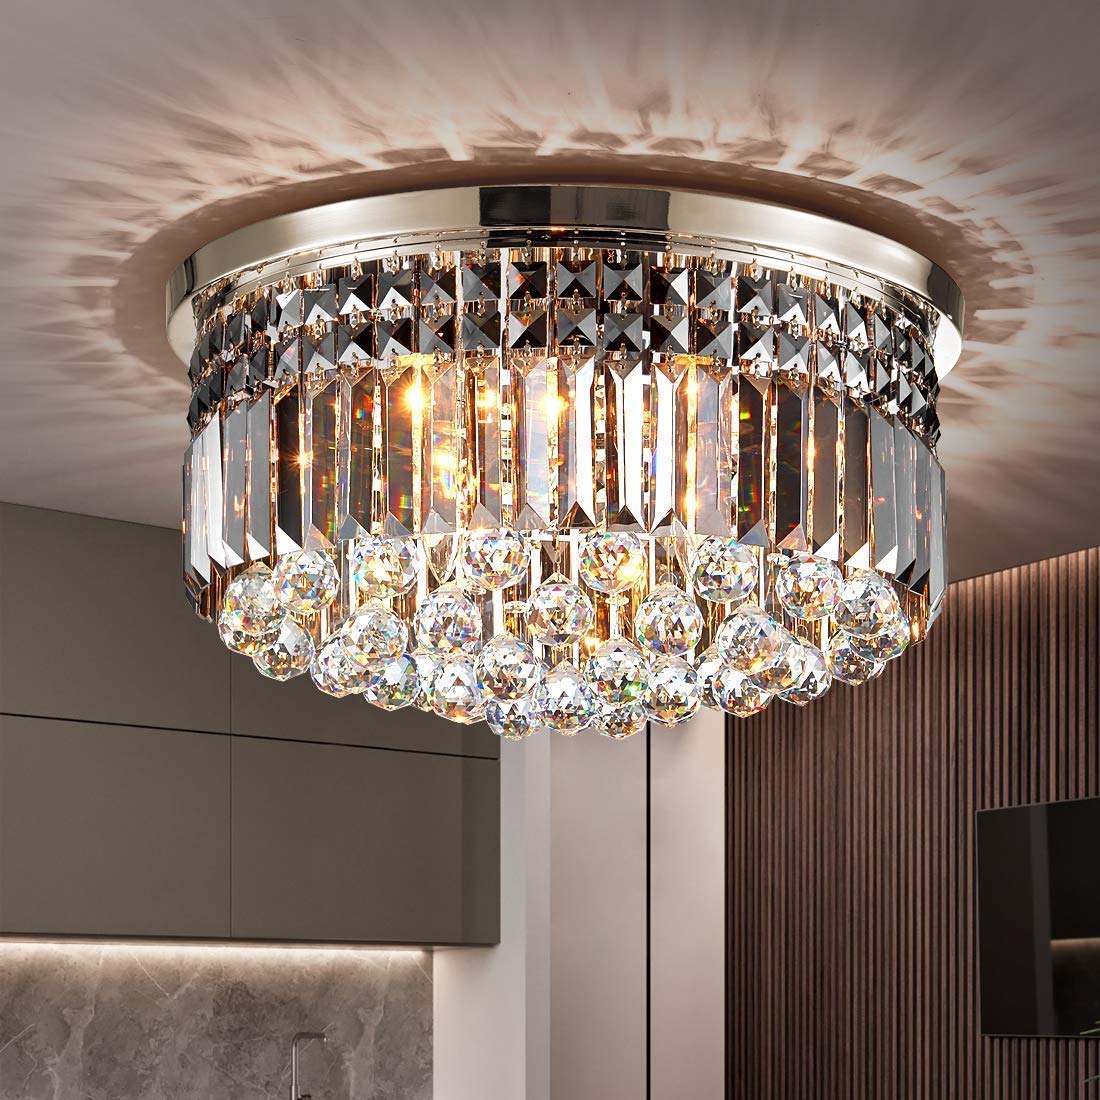 TZOE crystal chandelier, Modern chandeliers,Flush Mount chandelier,ceiling Light Fixture,for Kitchen Foyer Dining Room Bathroom